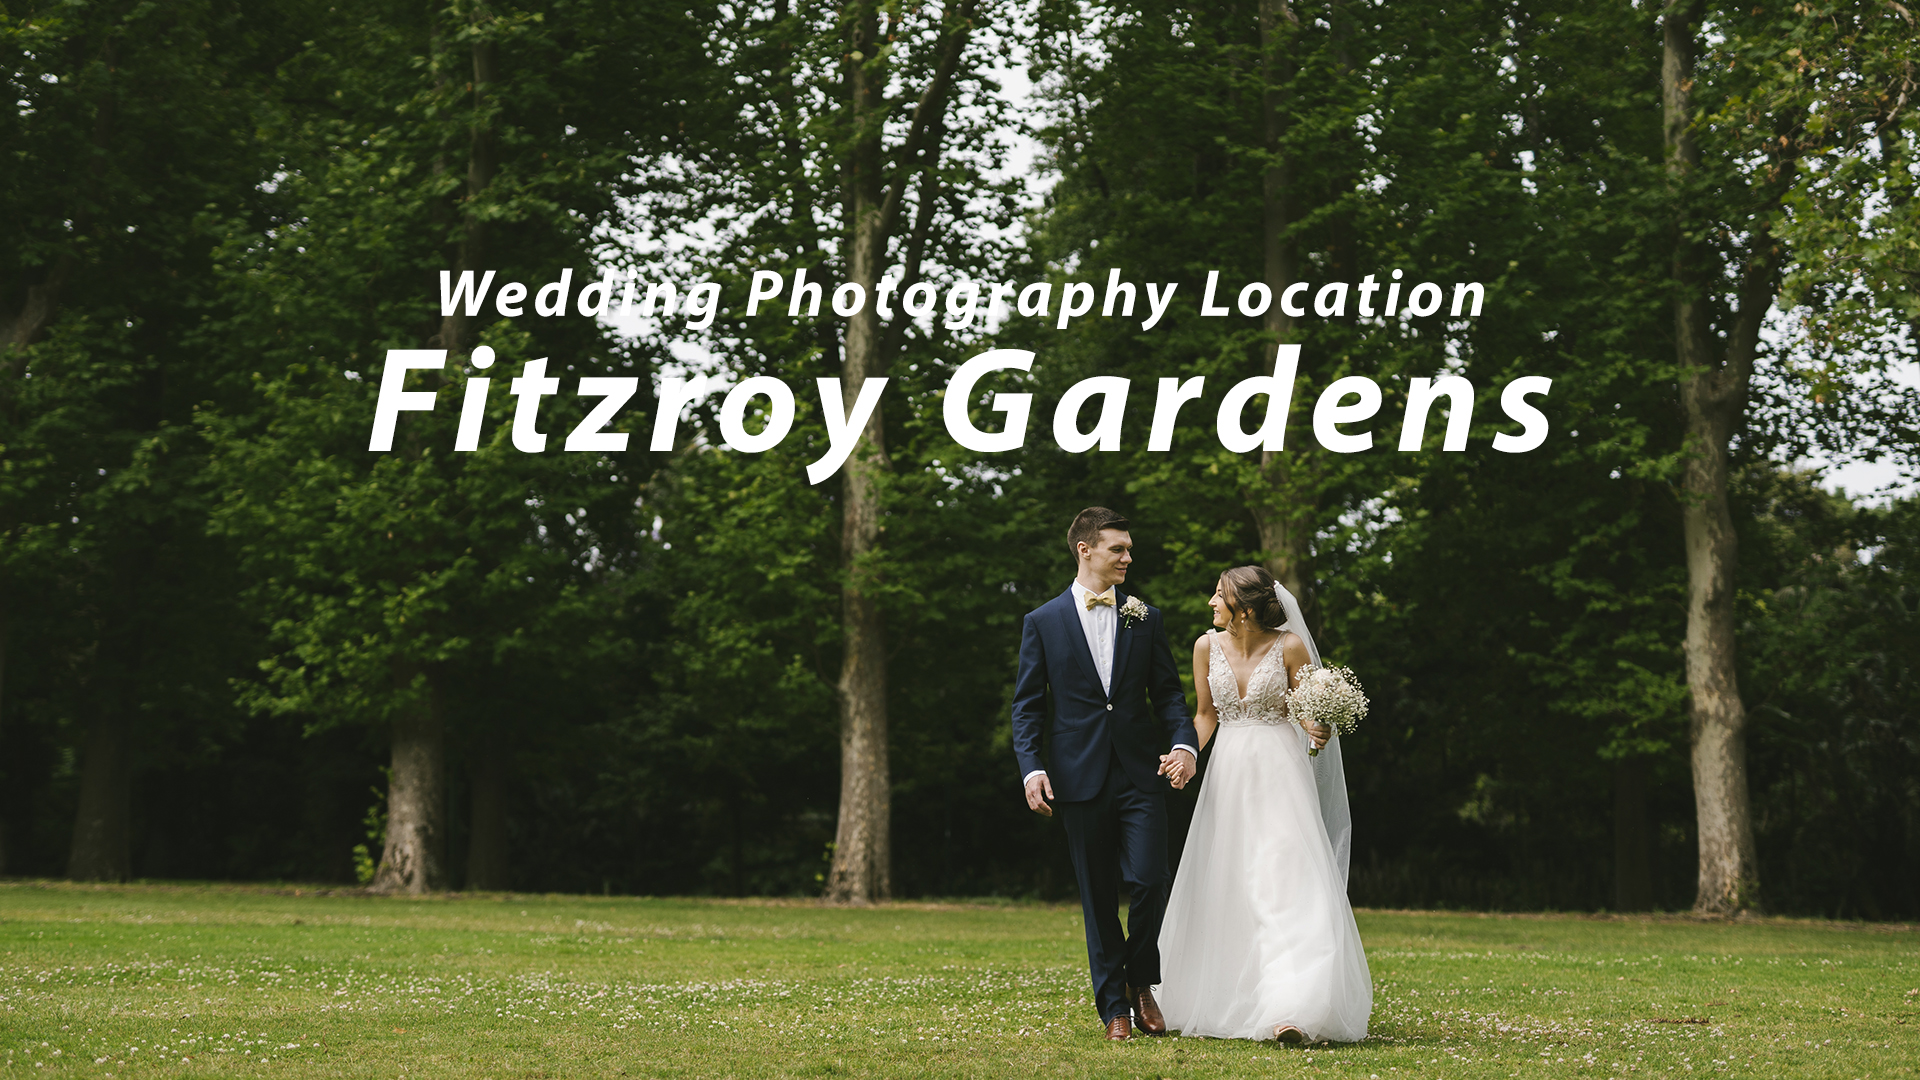 fiztory gardens wedding location - 7 Spots in Fitzroy Gardens Wedding Photo Location